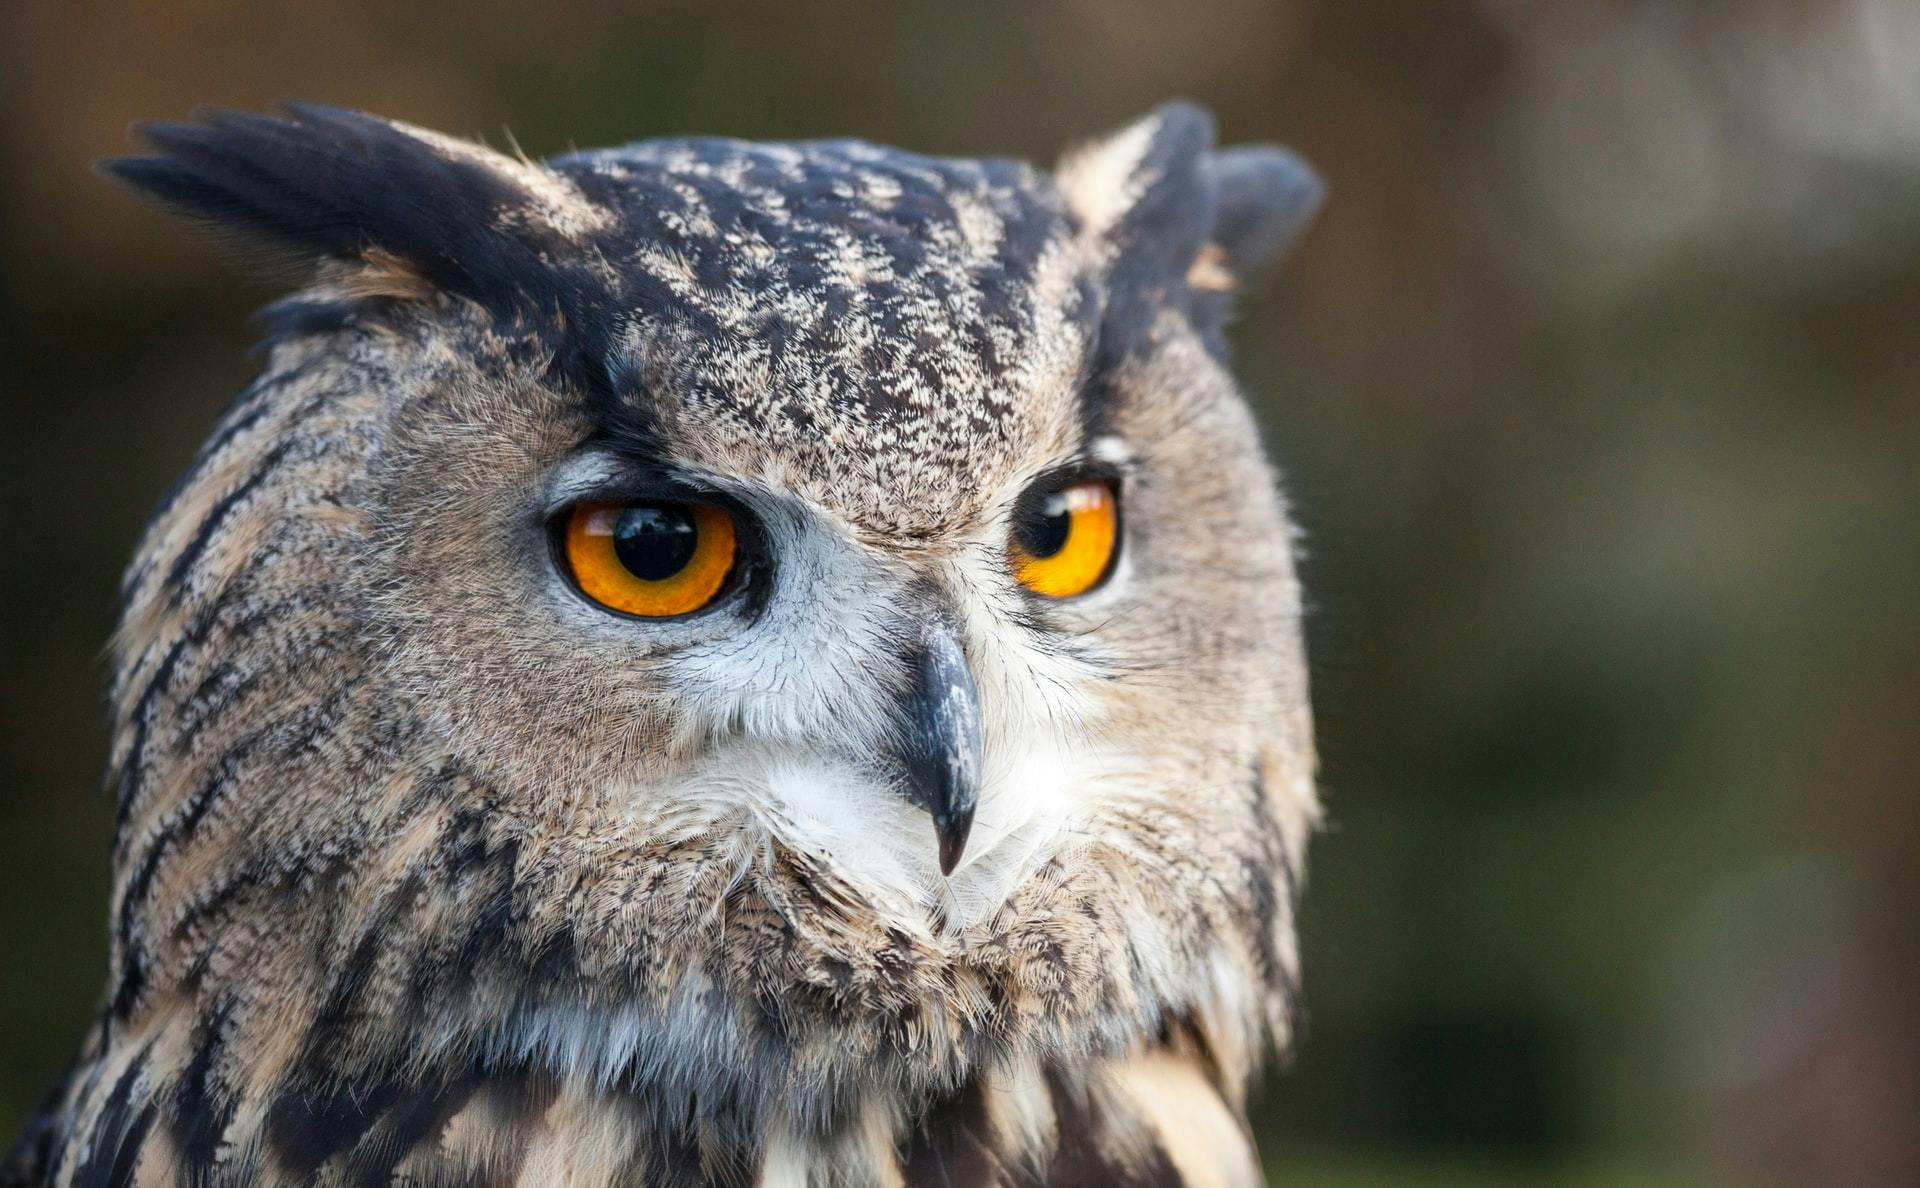 Owl. Photo by Roger Bradshaw on Unsplash